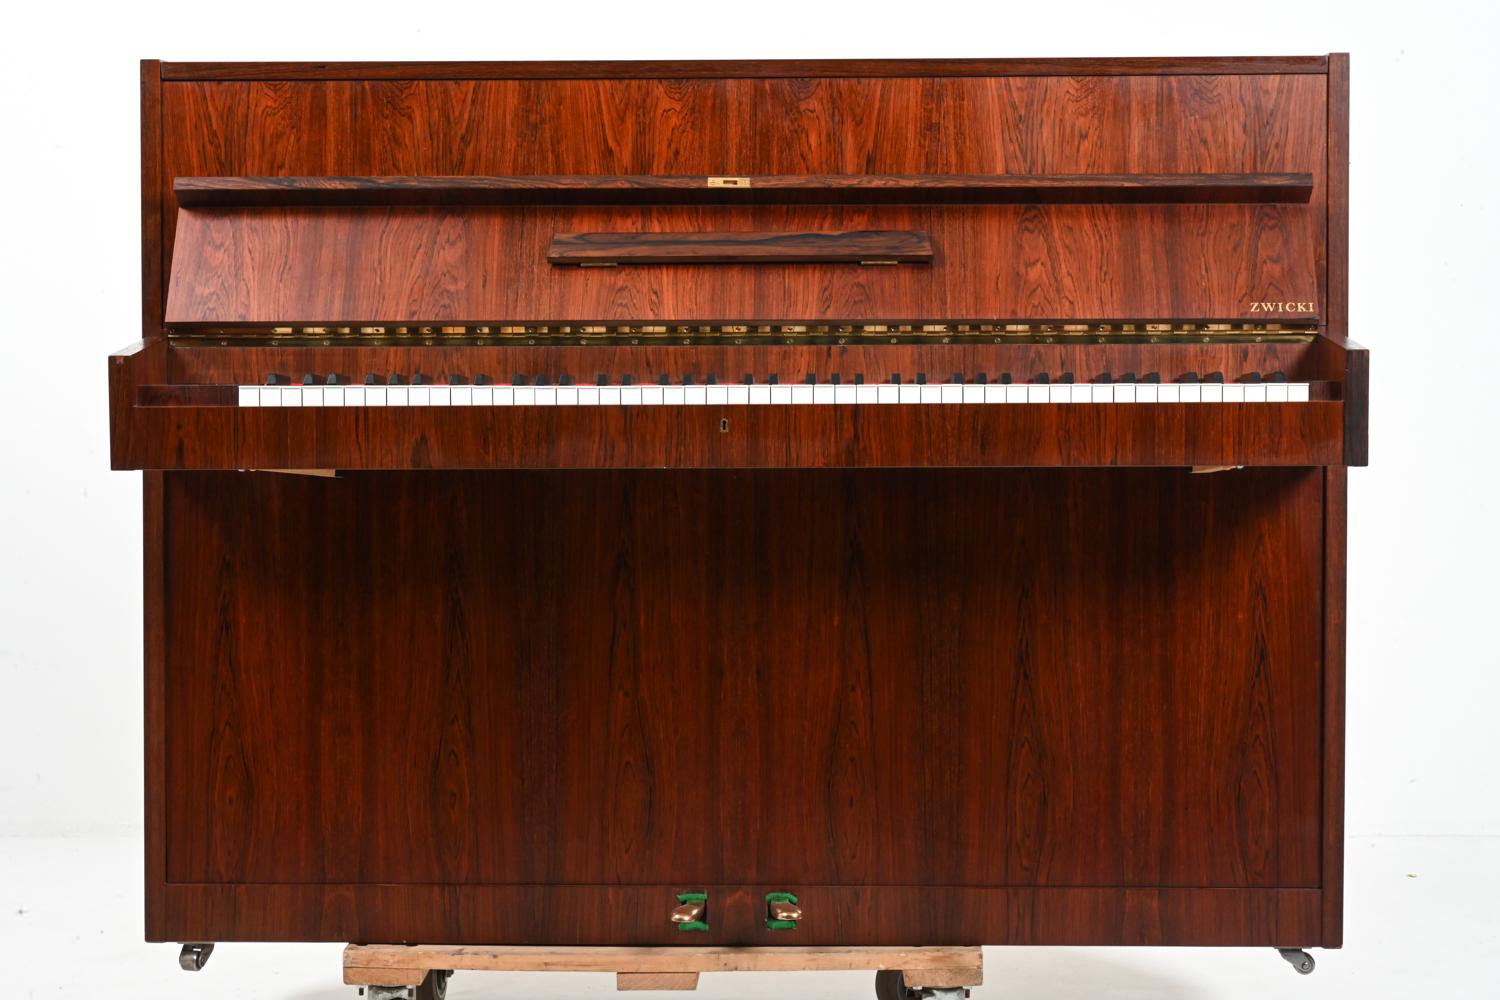 Danish Very Rare Louis Zwicki 85-Key Upright Piano in Rosewood